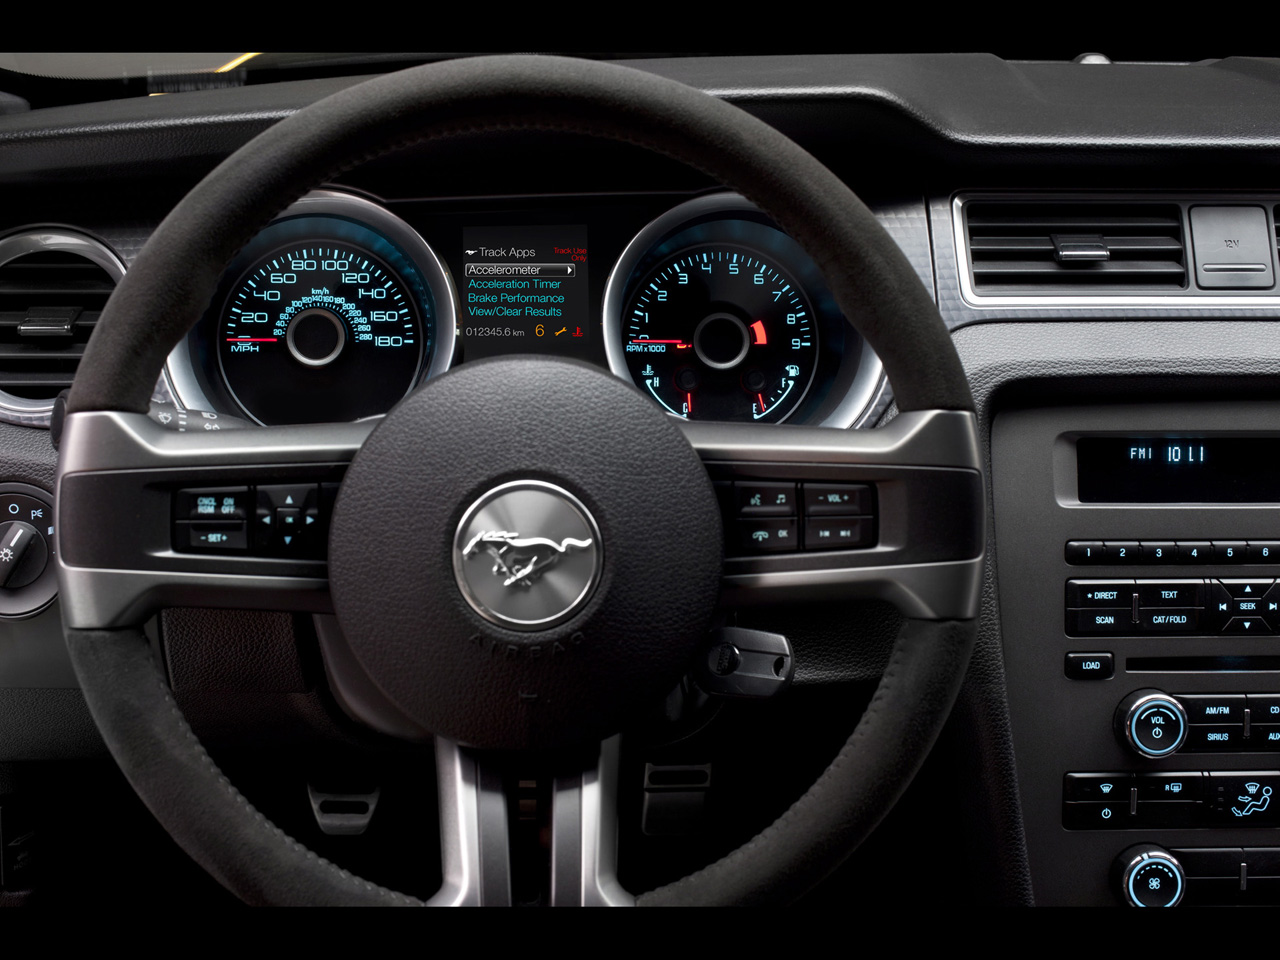 2013 Ford Mustang Boss 302 - Dashboard - 1280x960 - Wallpaper